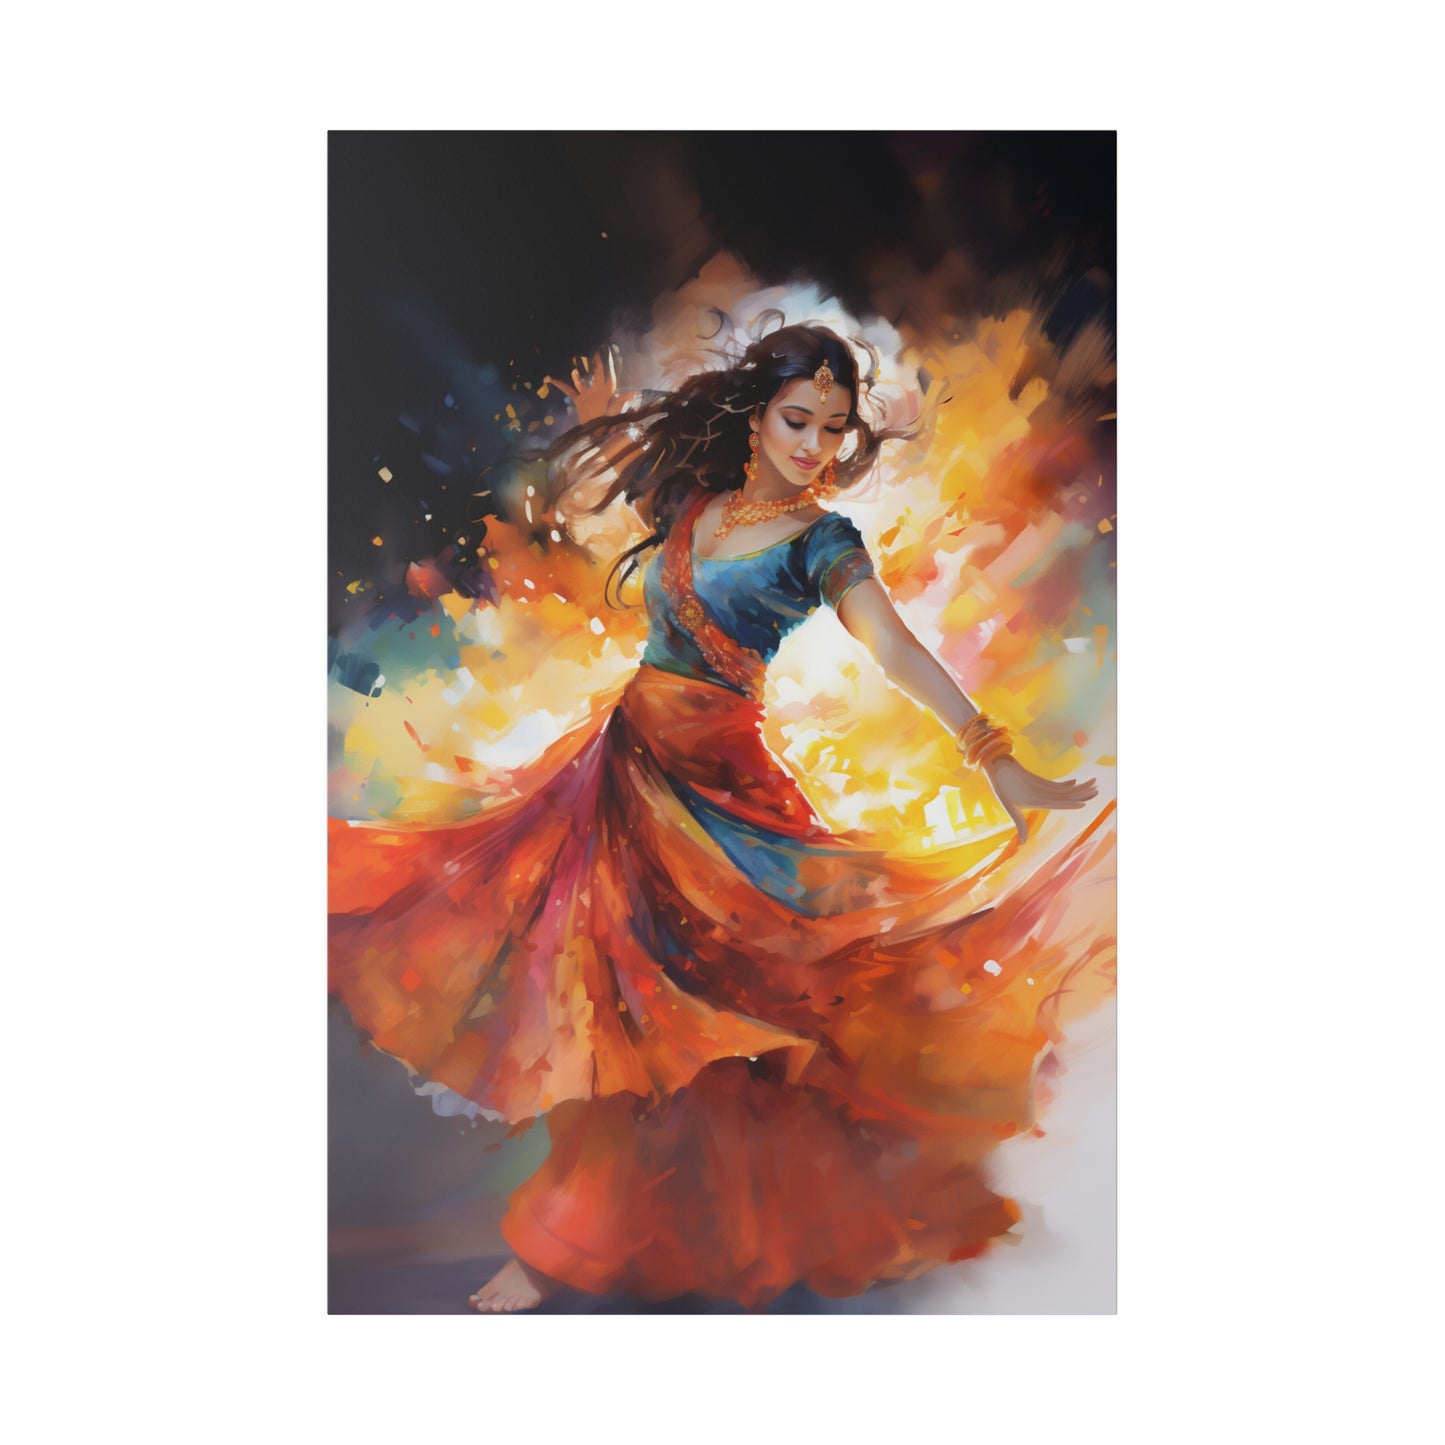 Rhythms of Grace: An Indian Dance in Watercolor